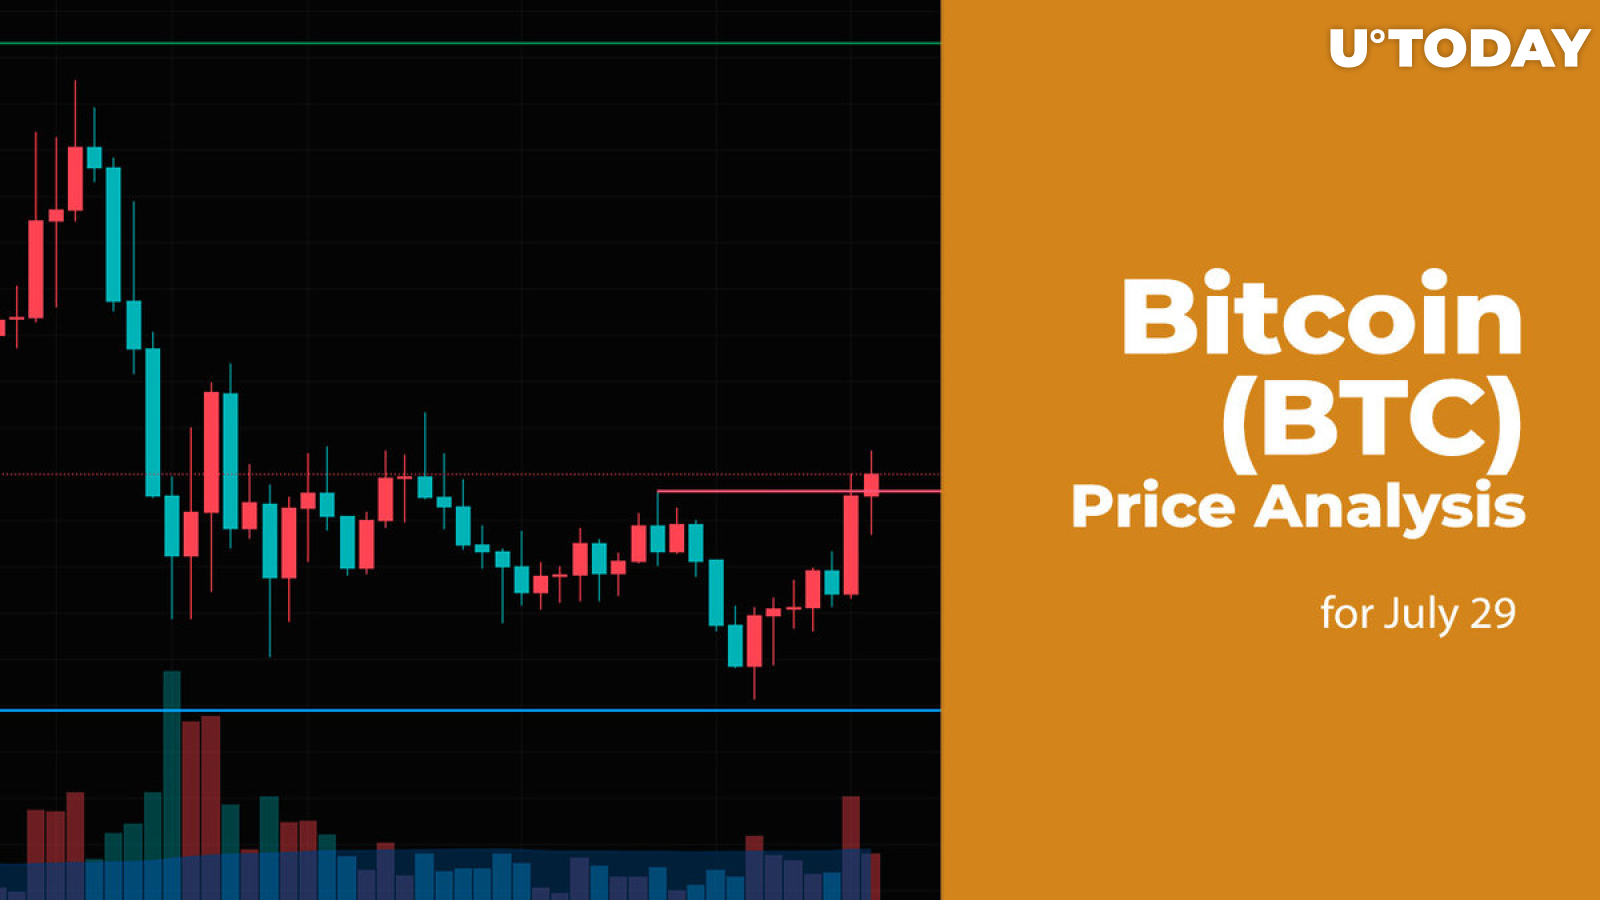 Bitcoin (BTC) Price Analysis for July 29